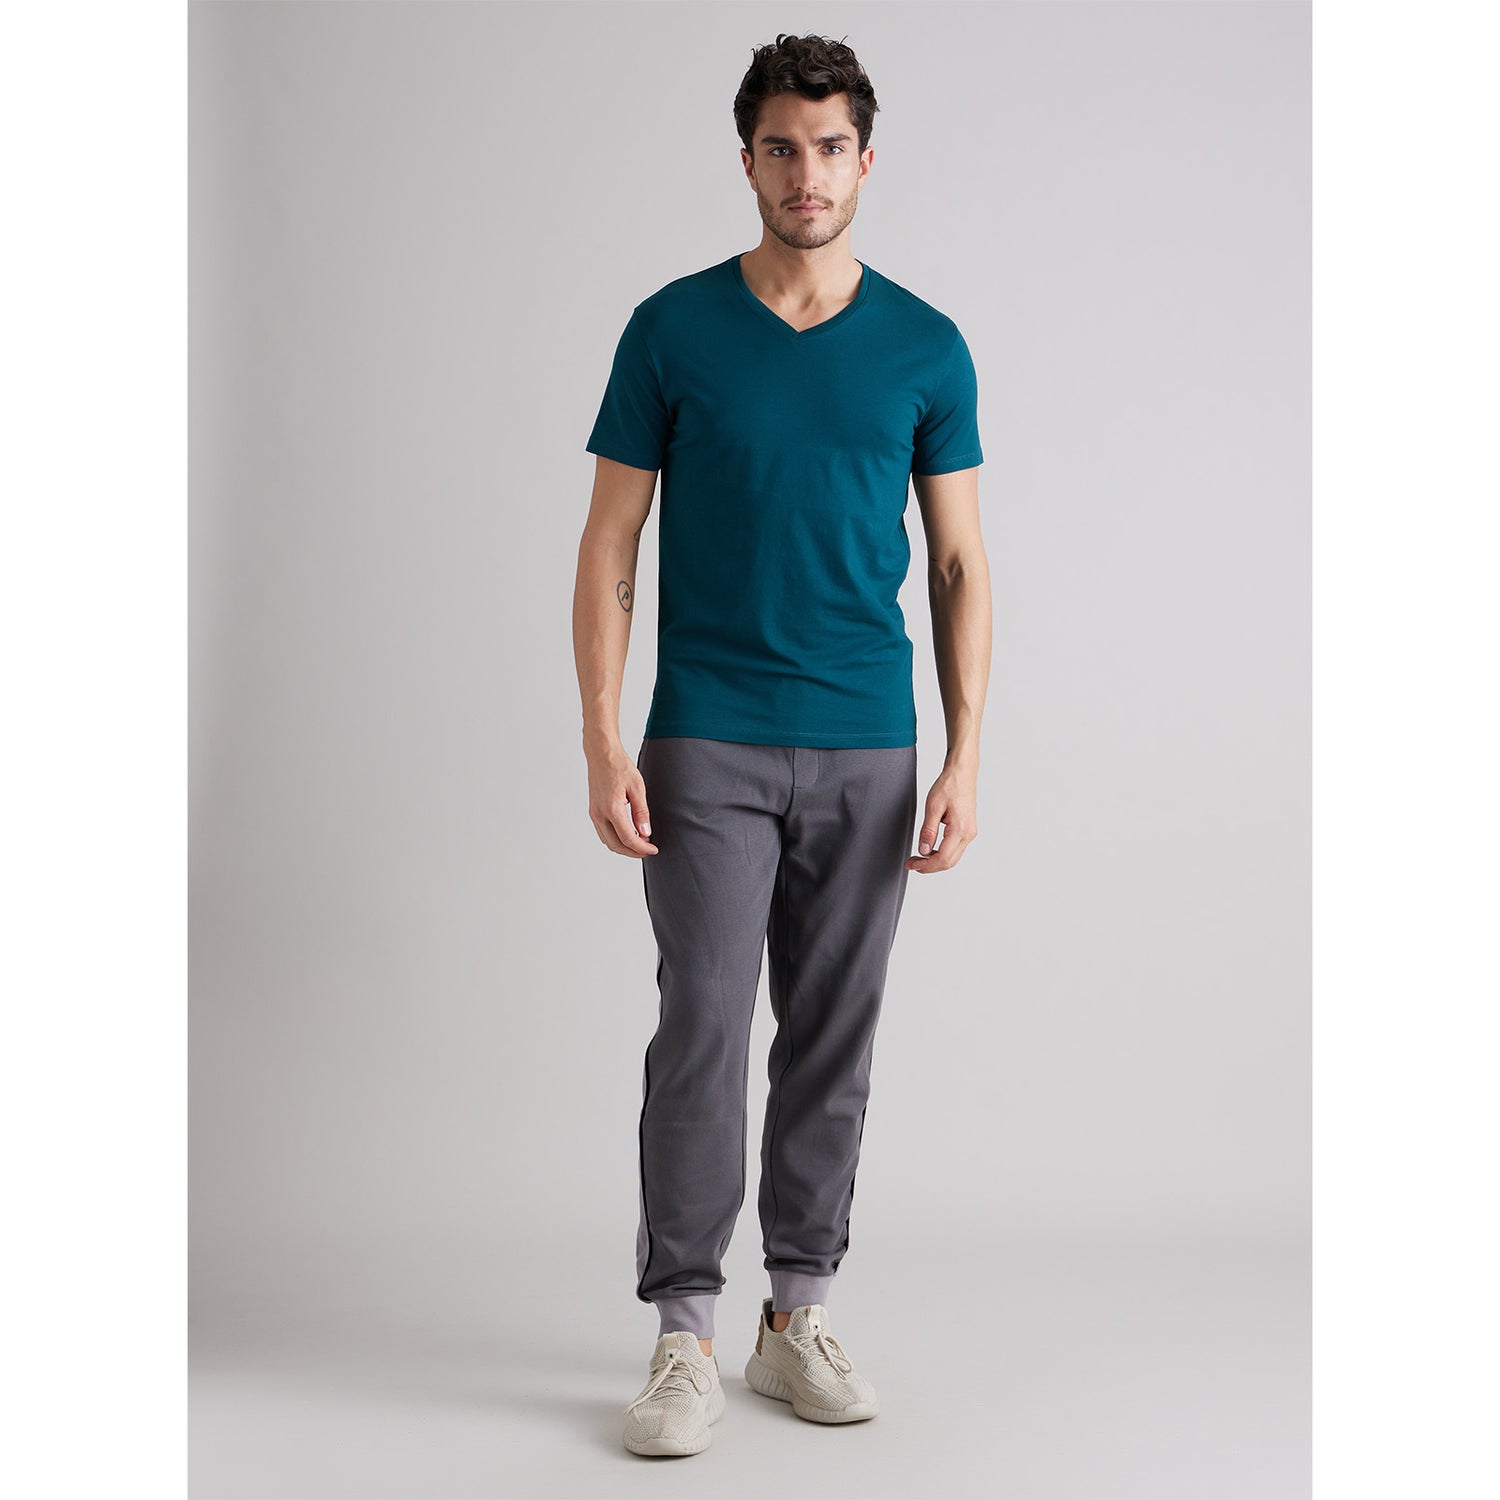 Green V-Neck Short Sleeves Cotton T-shirt (NEUNIV)